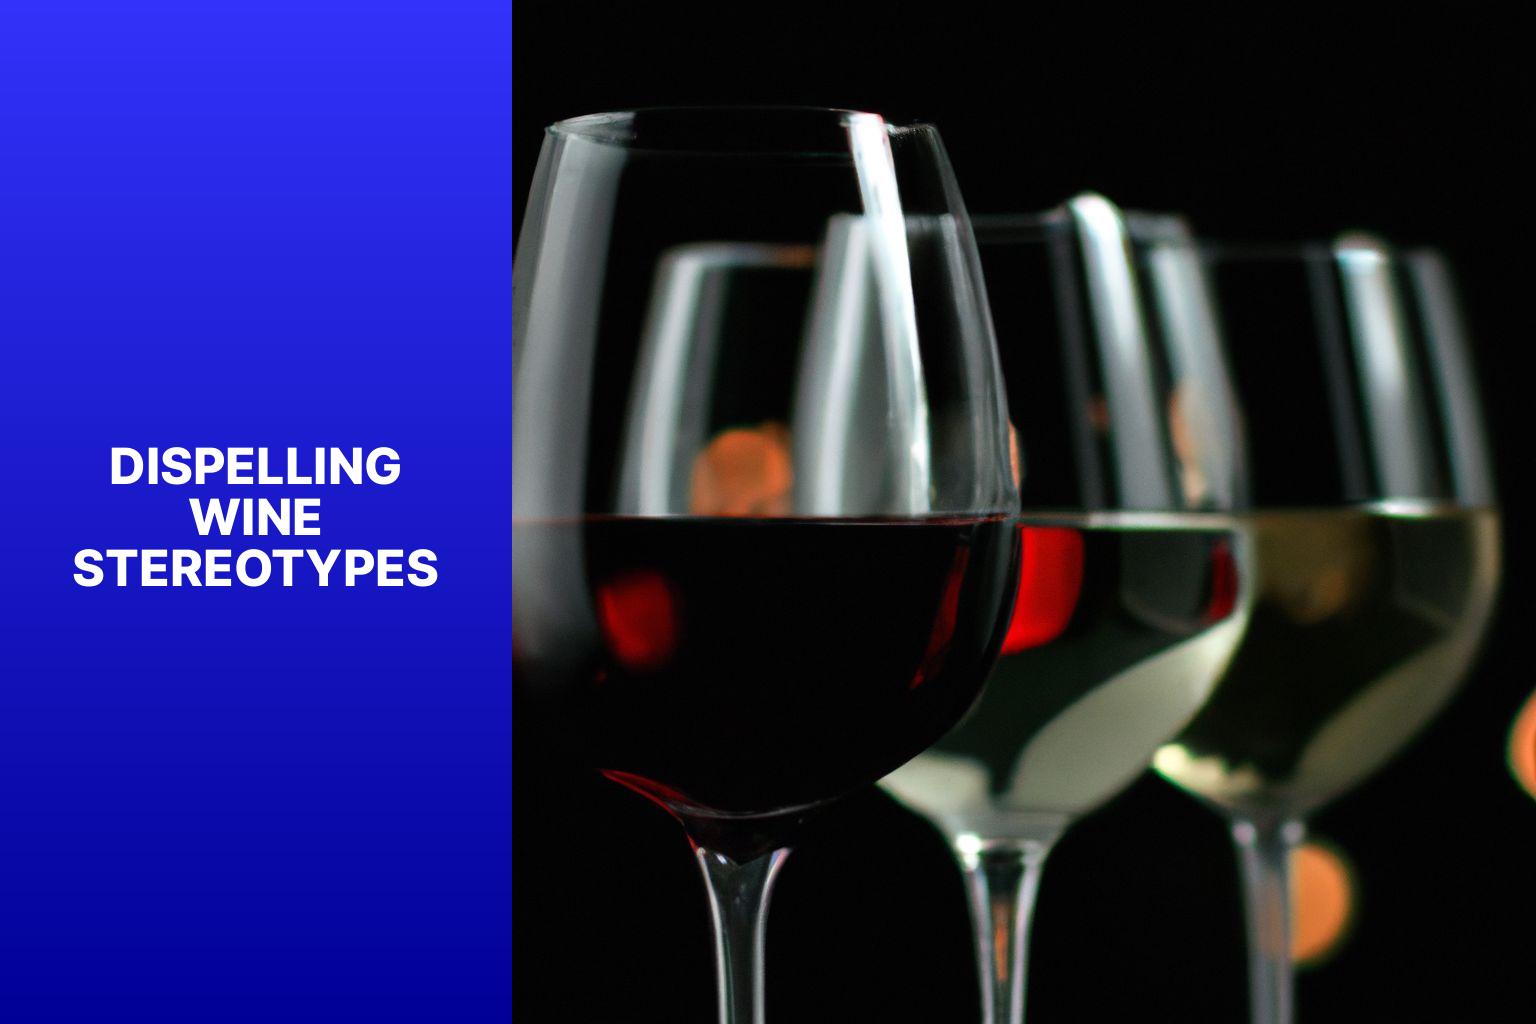 Dispelling Wine Stereotypes - Wine Wisdom: Breaking the Stereotype 